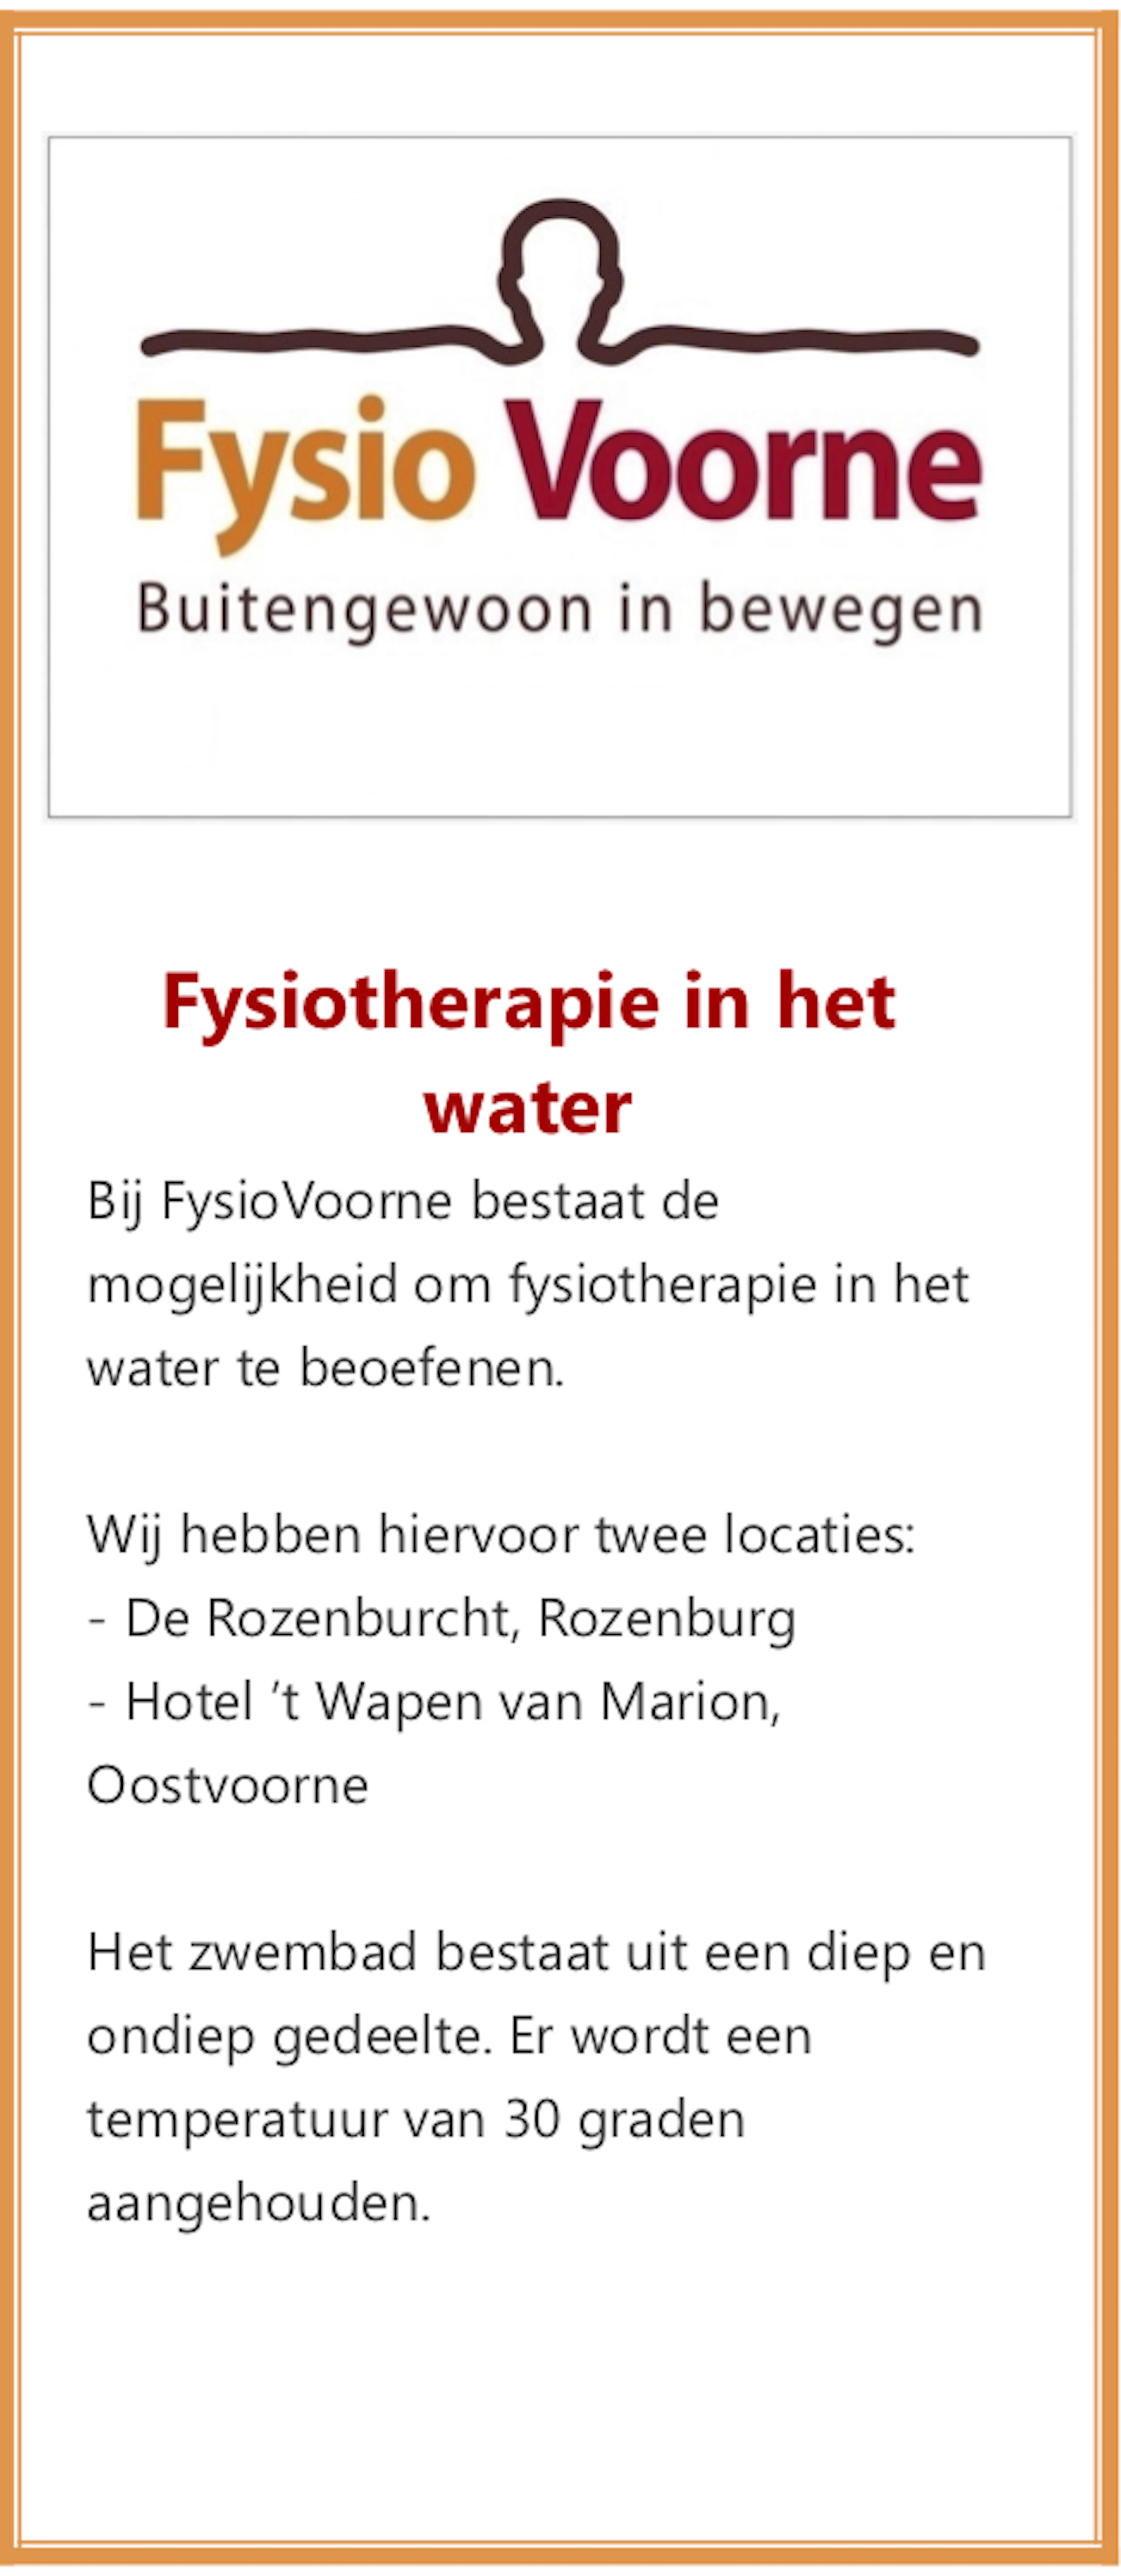 Fysiotherapie in water